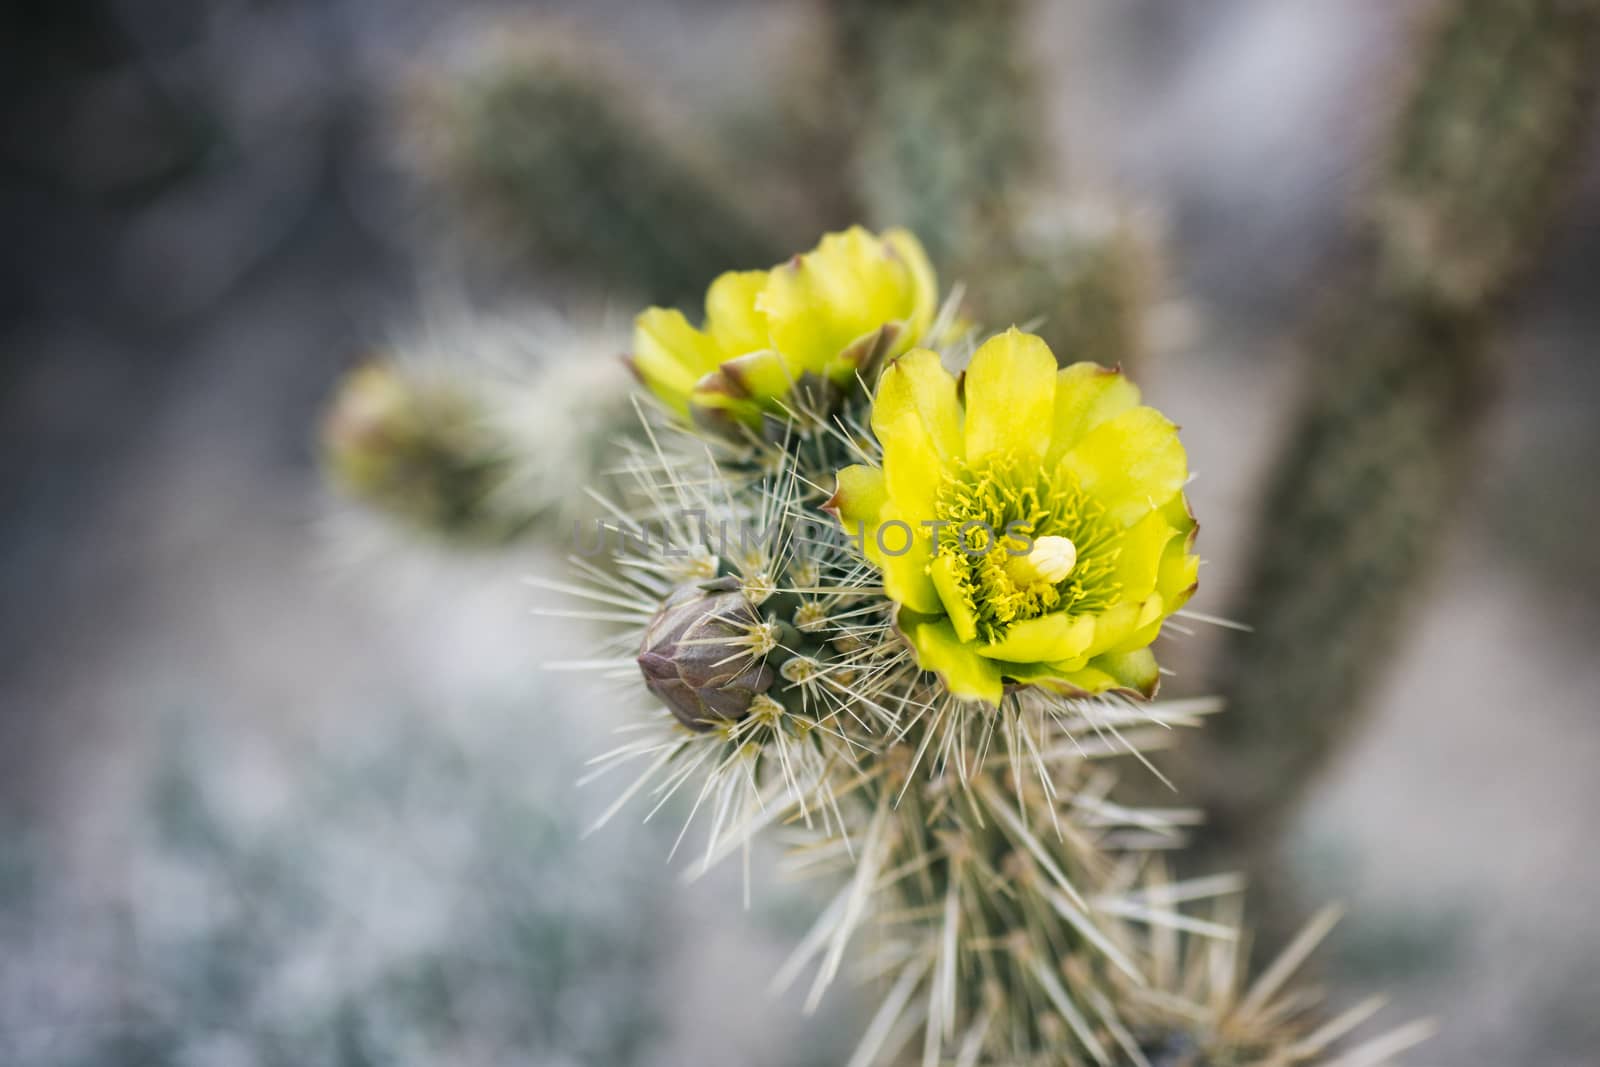 Desert Plant in Anza-Borrego State Park, California, USA by patricklienin